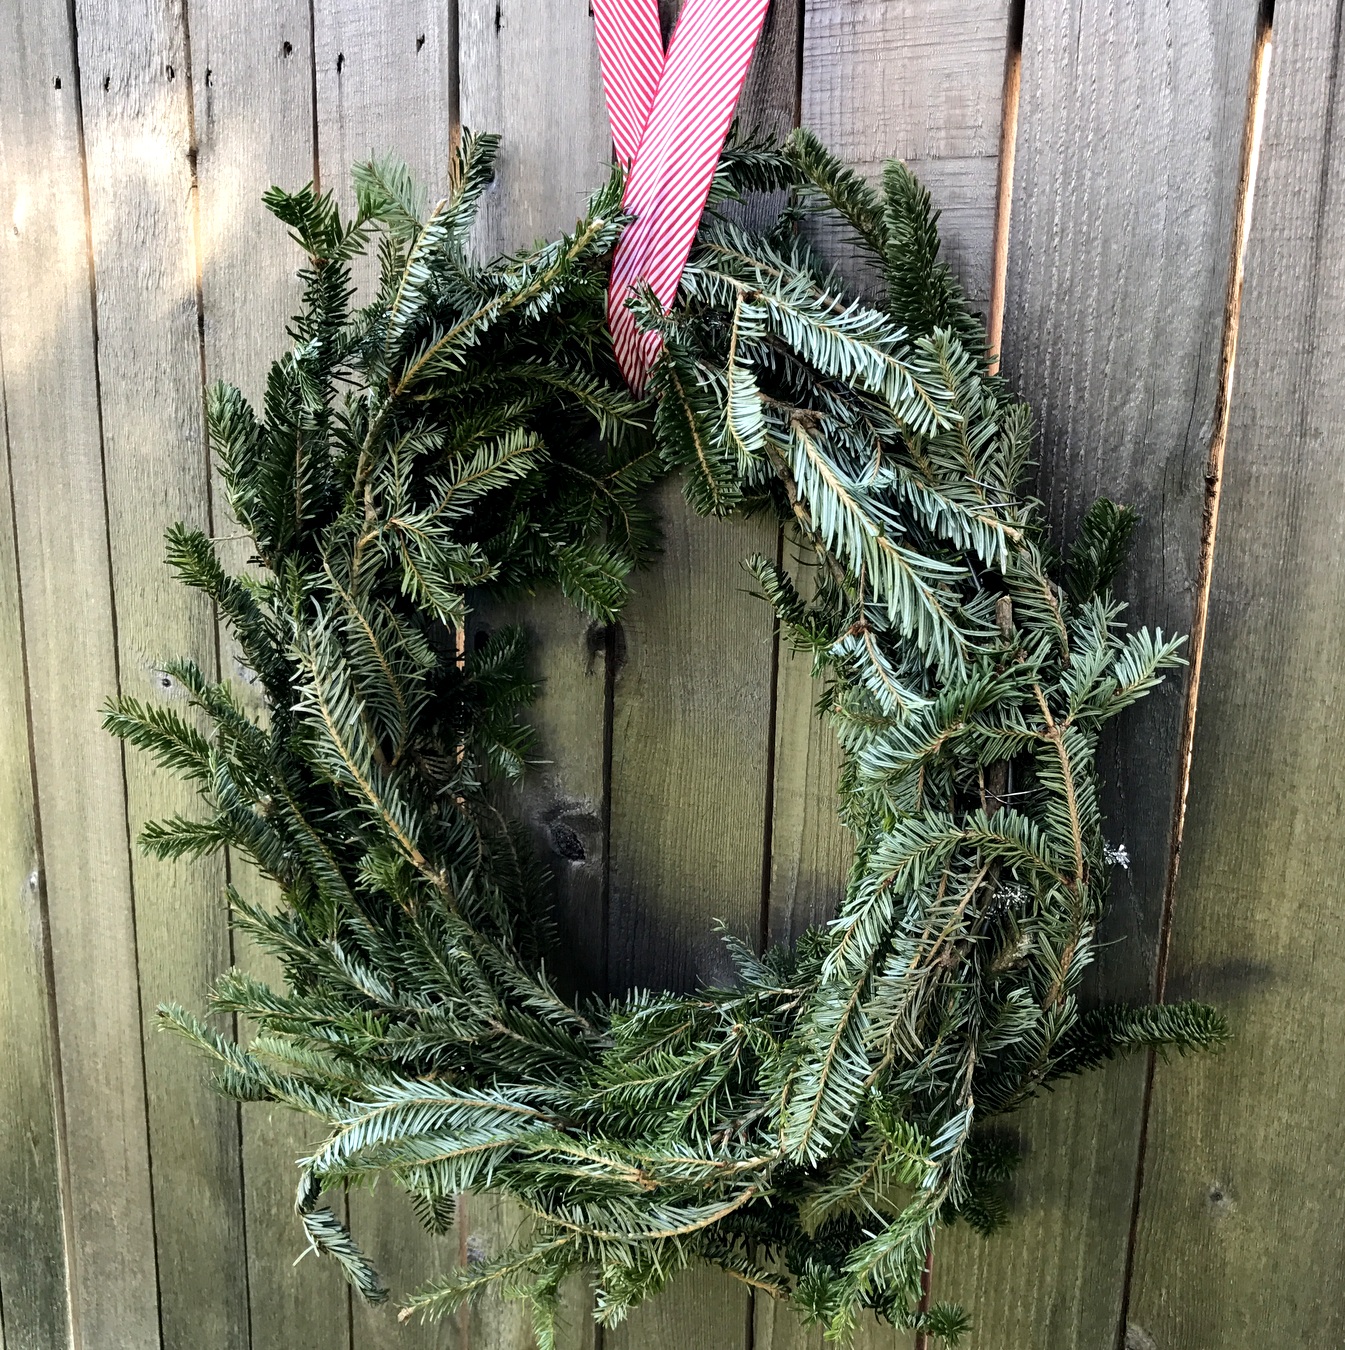 how to make an evergreen wreath